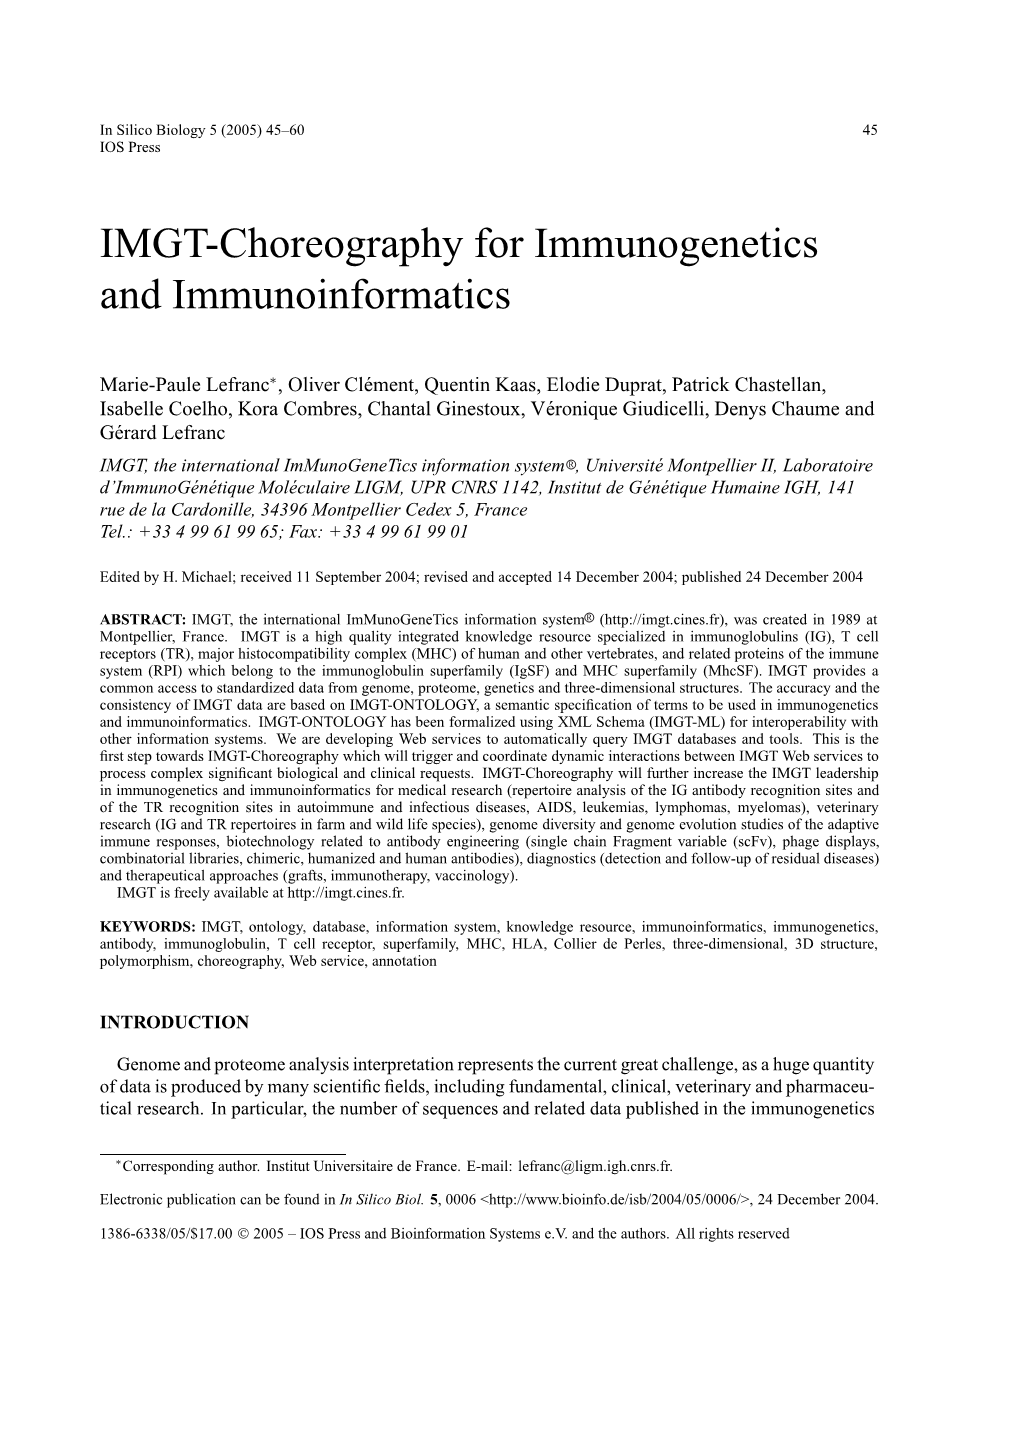 IMGT-Choreography for Immunogenetics and Immunoinformatics